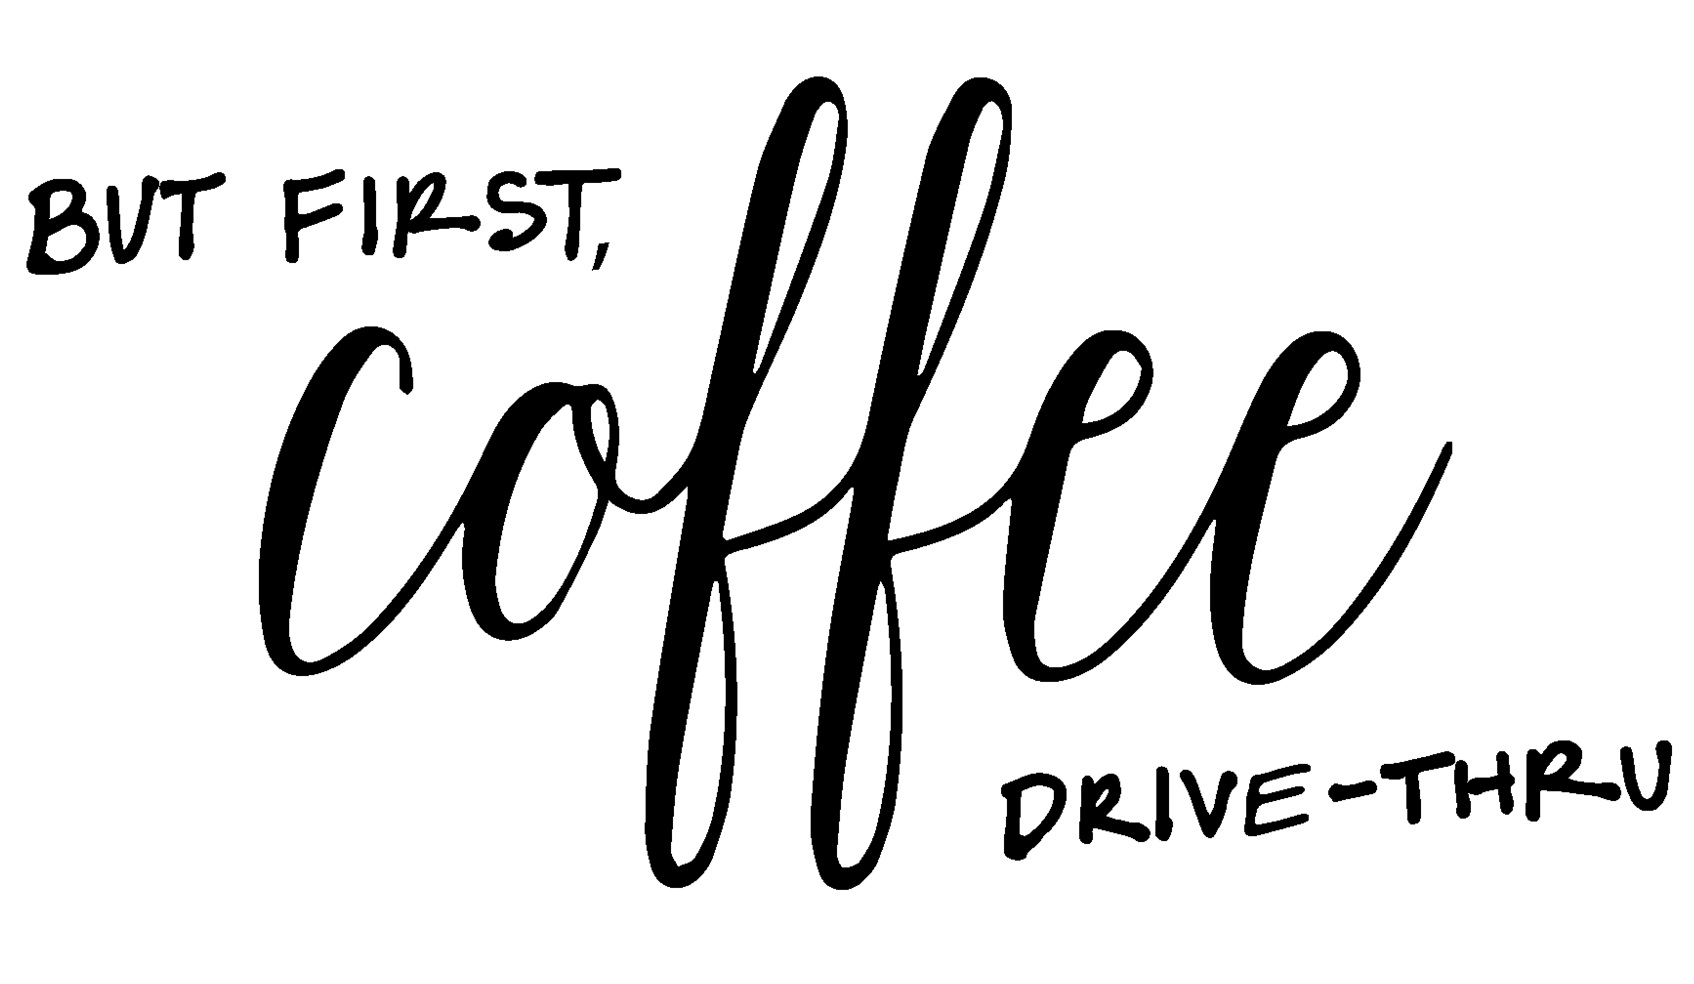 BUT FIRST, coffee DRIVE-THRU